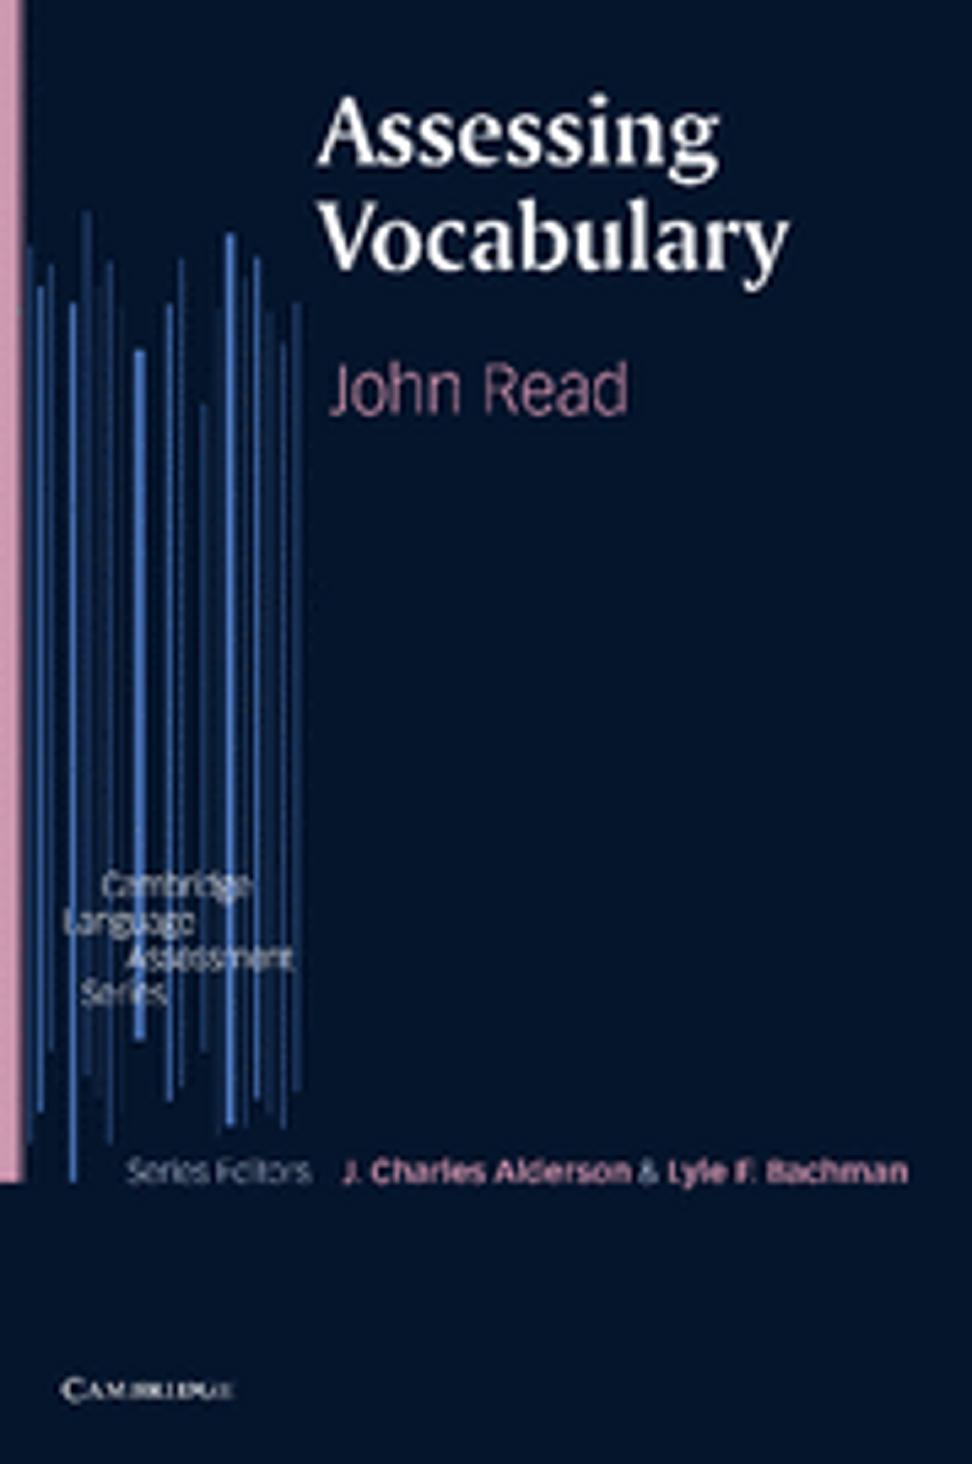 ASSESSING VOCABULARY - Cambridge Language Assessment